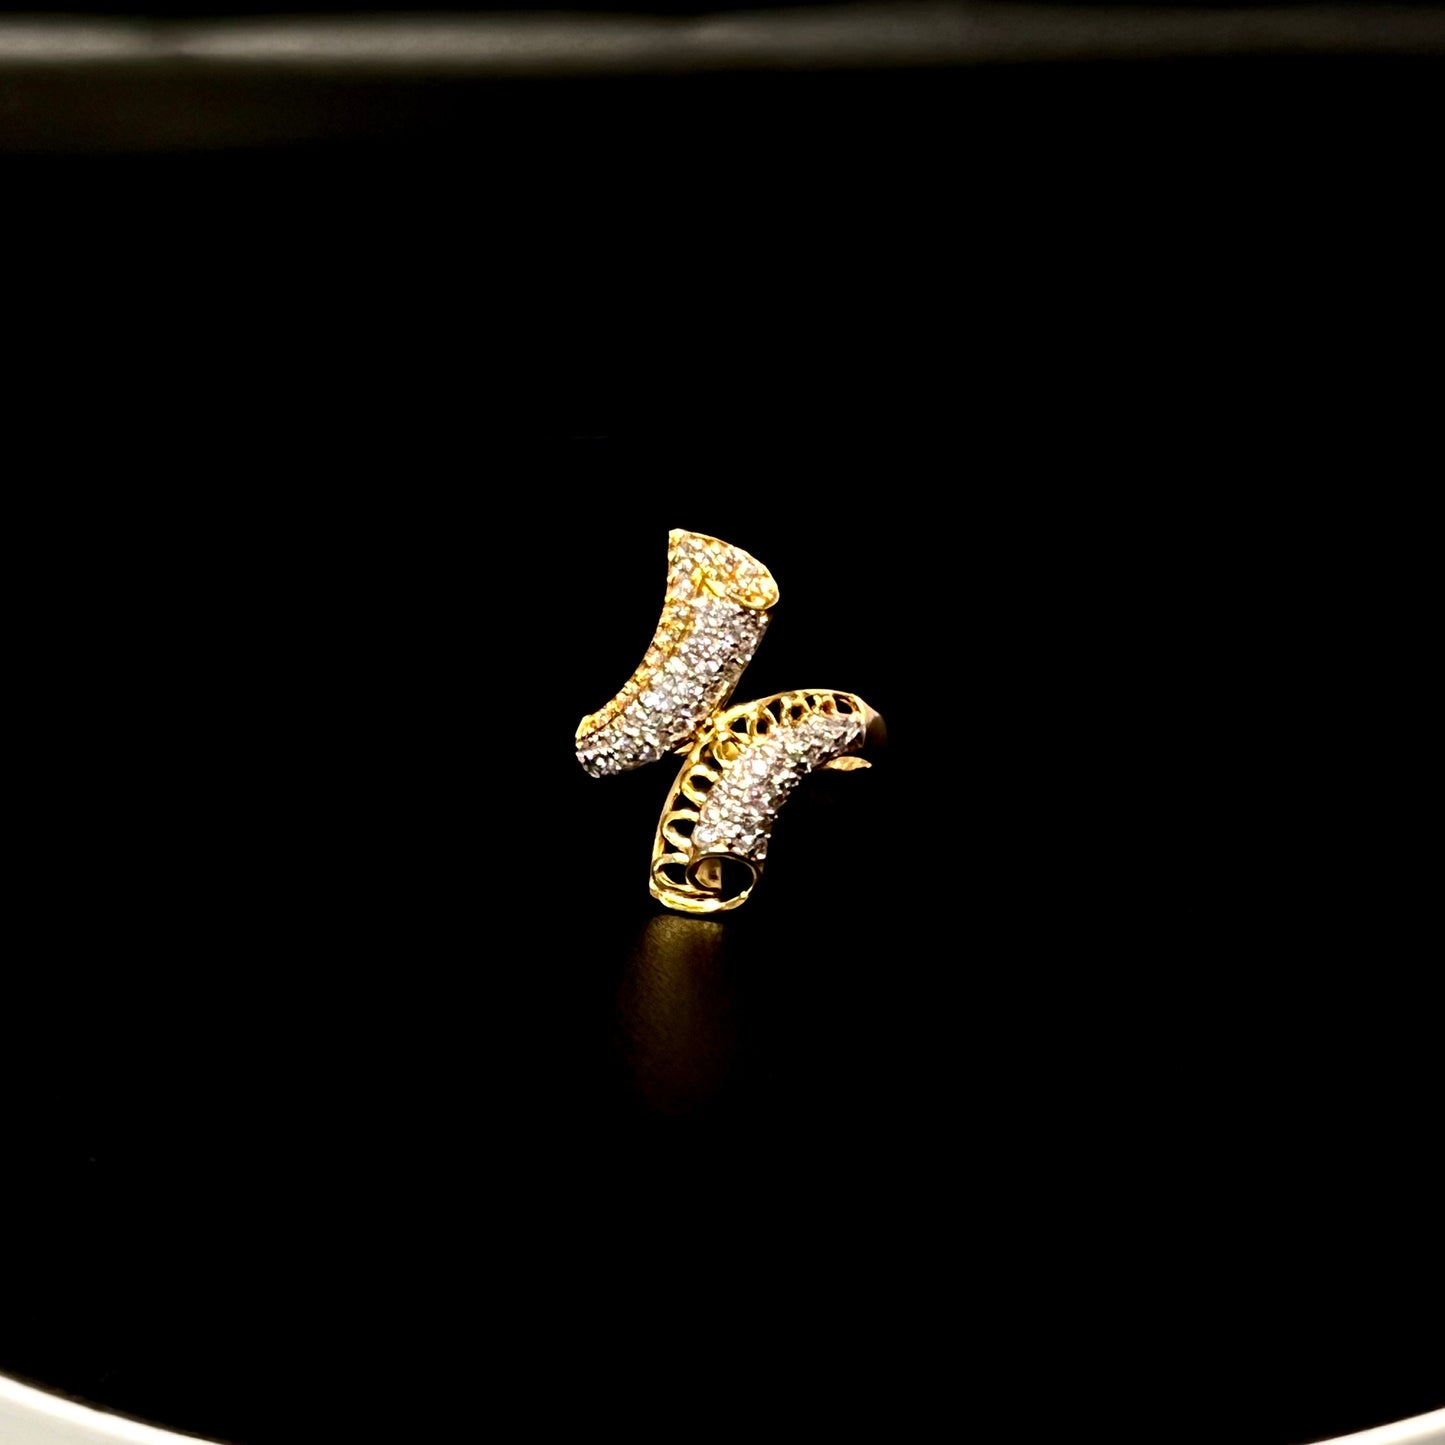 Serpentine Gold Ring with Glistening CZ Stones